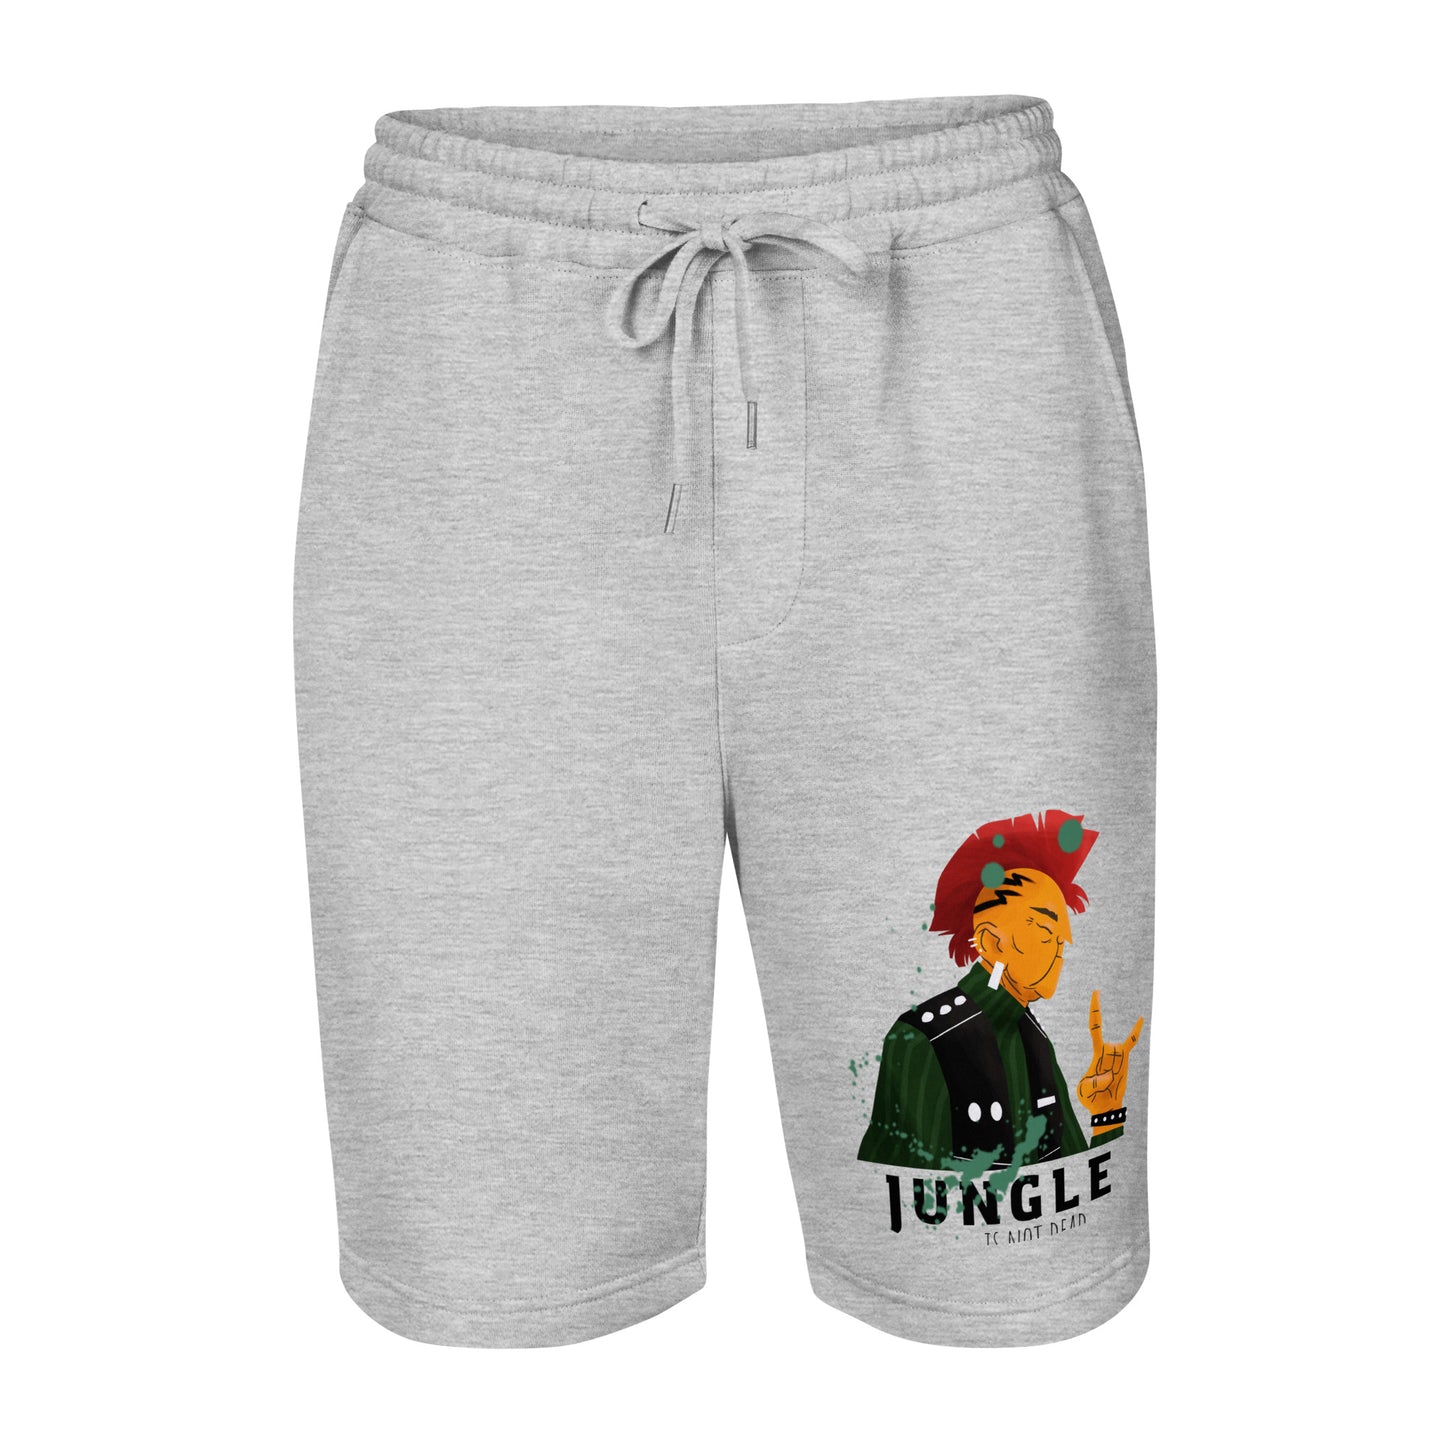 Jungle Boy P shorts